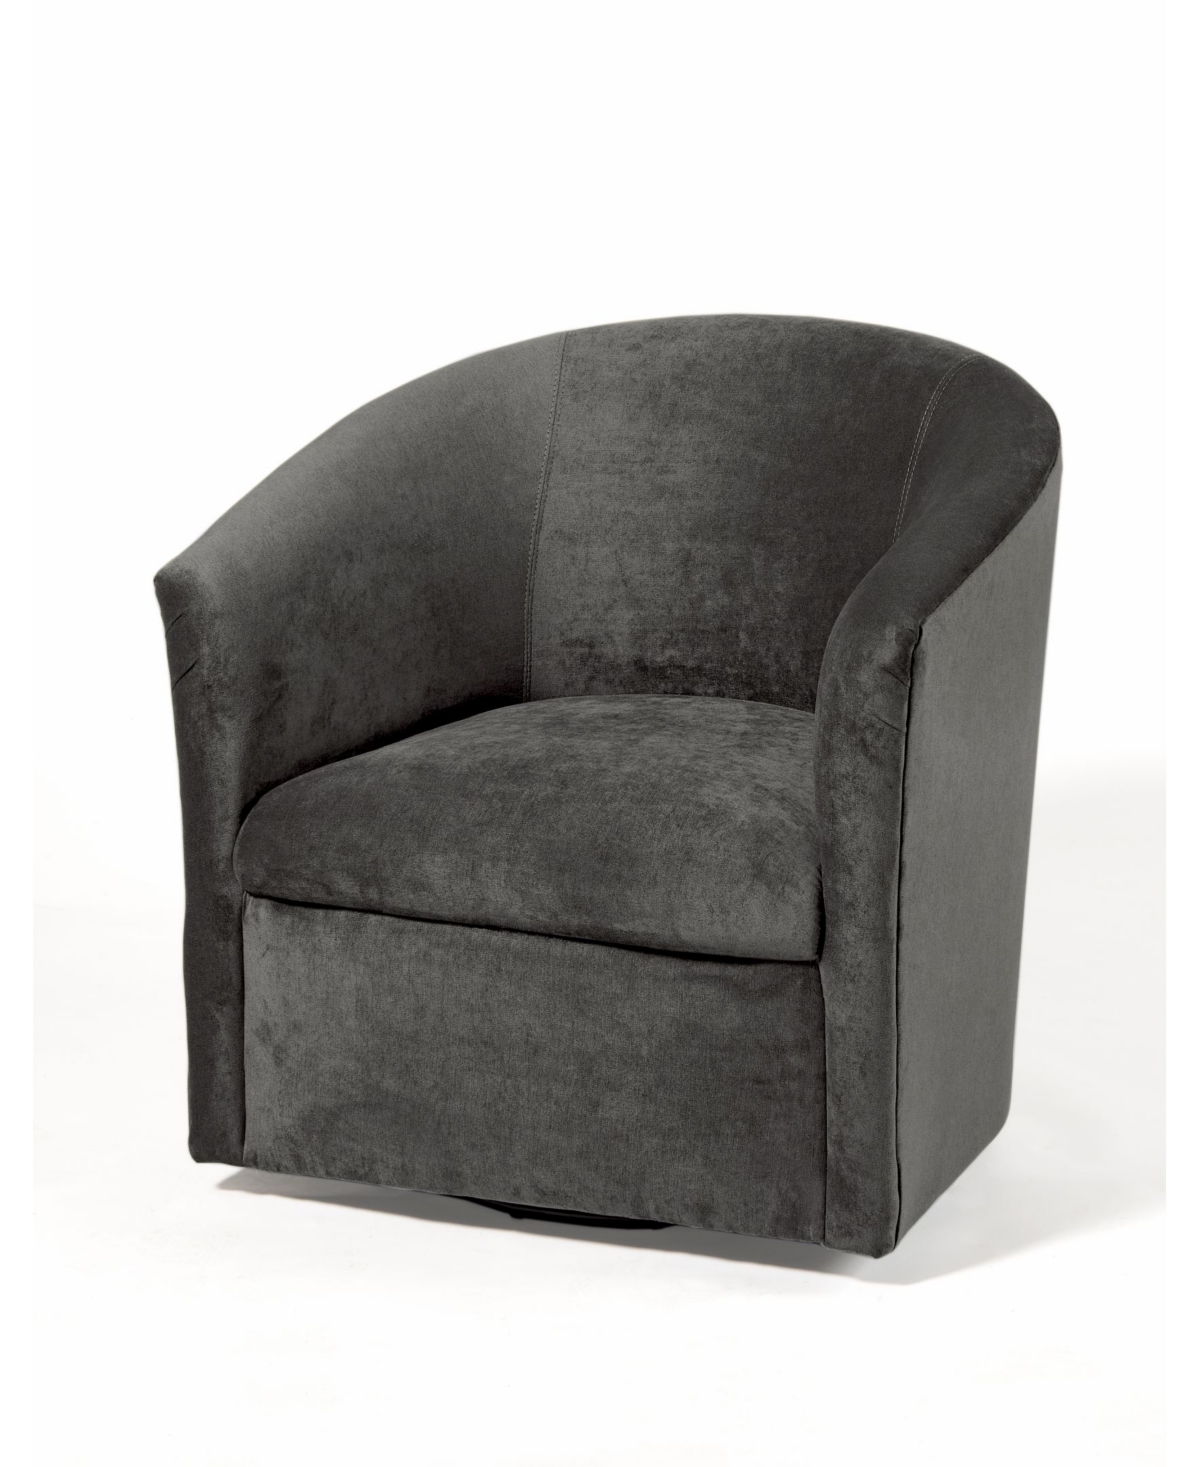 Comfort Pointe Elizabeth Swivel Chair In Medium Gray